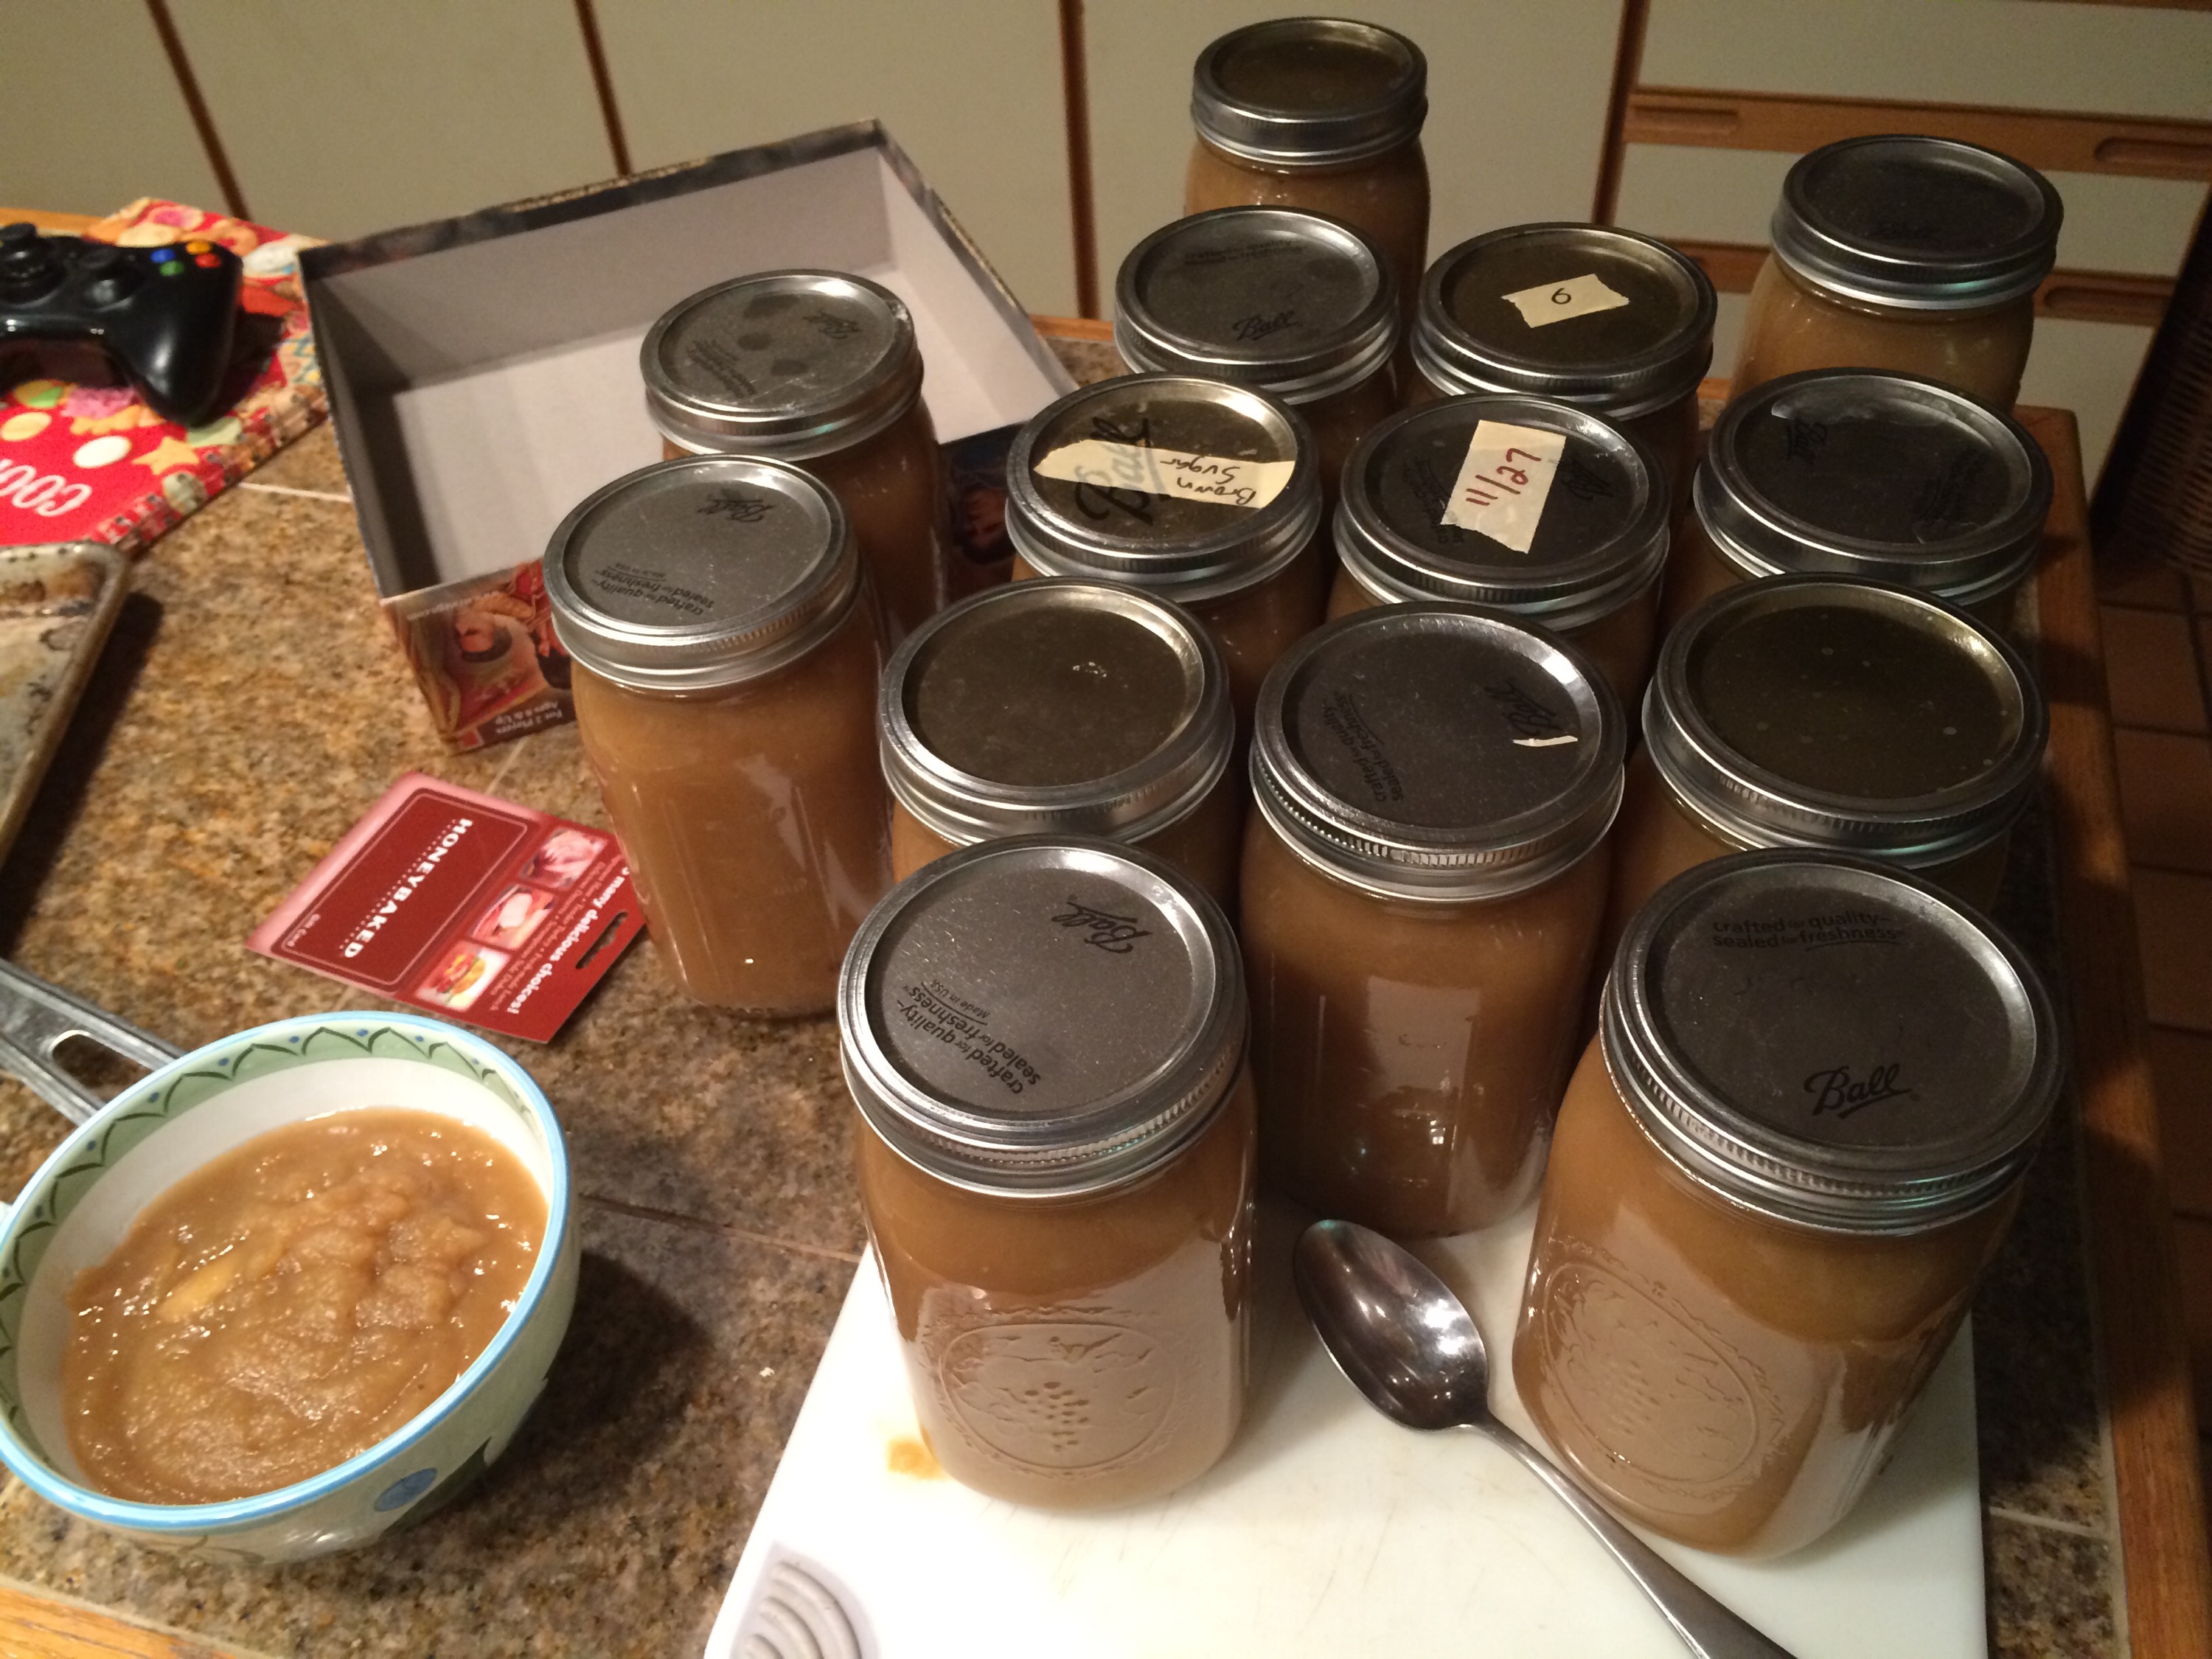 14 jars of homemade apple sauce.